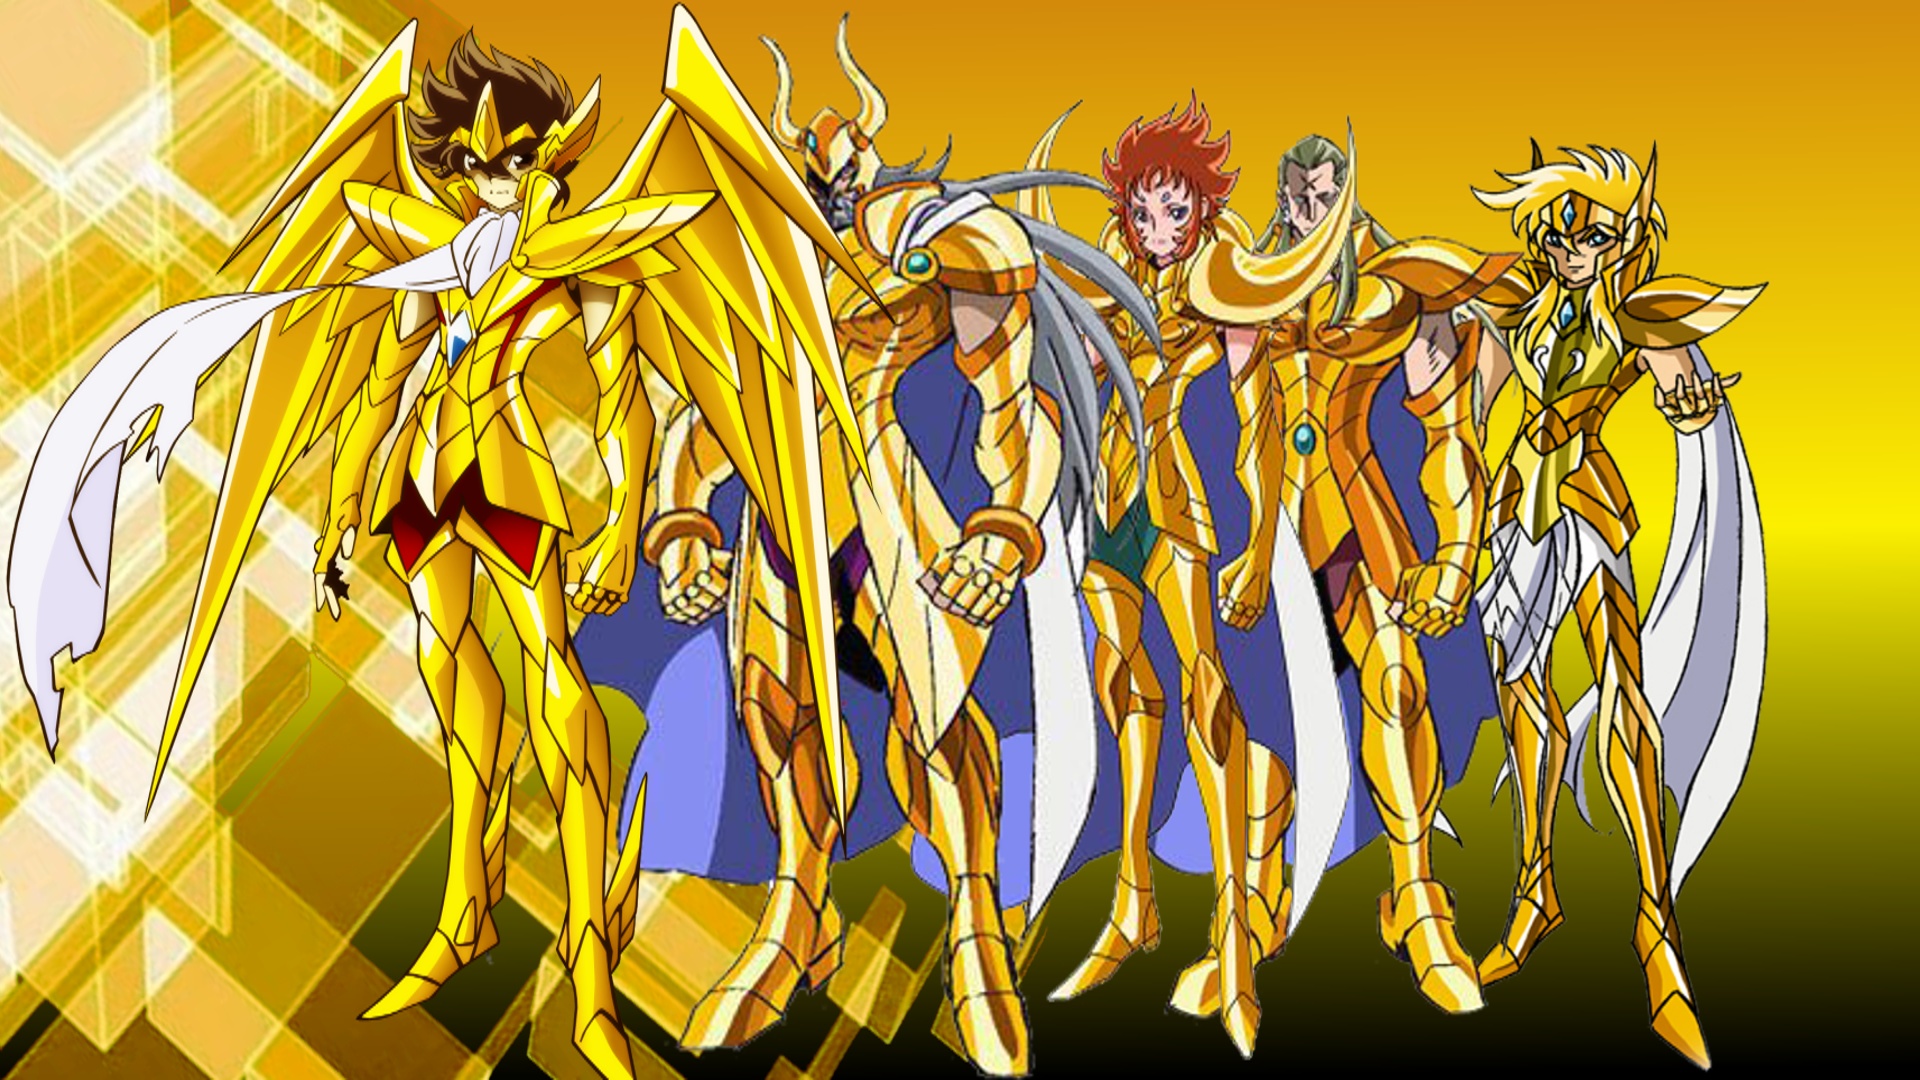 Great Anime Saint Seiya Gold Wallpaper HD SiwallpaperHD